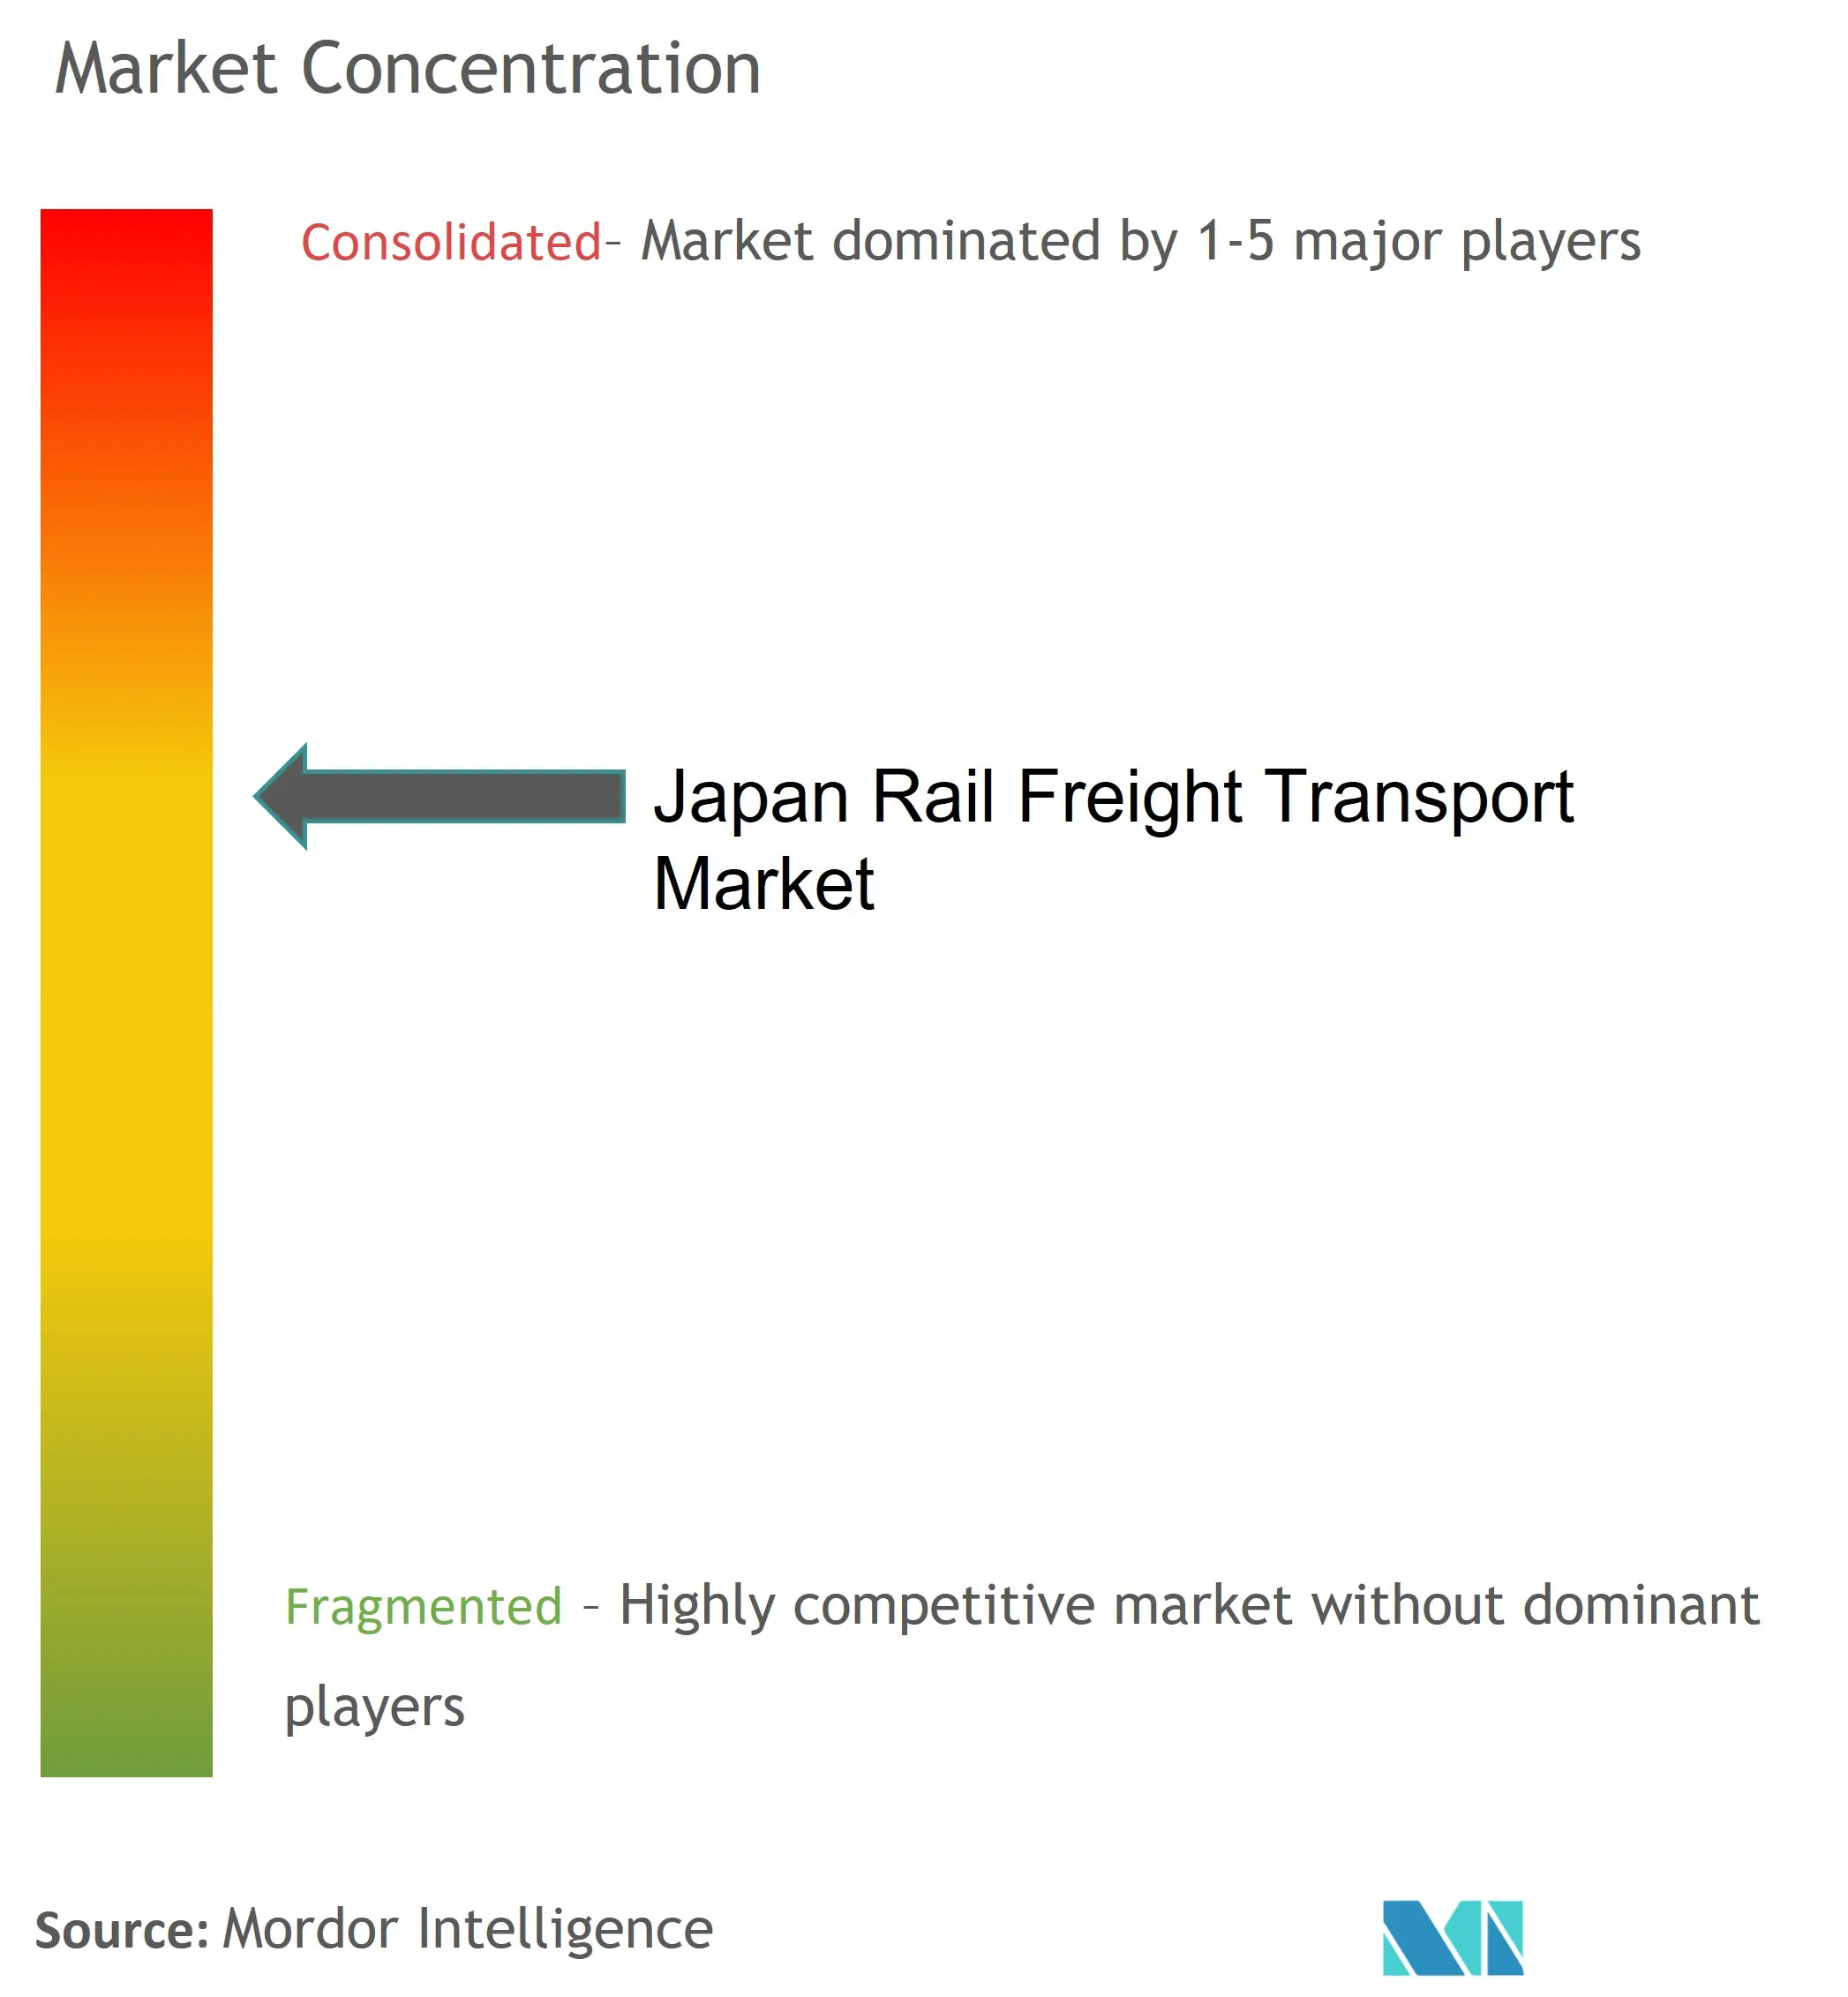 Japan Rail Freight Transport Market Concentration